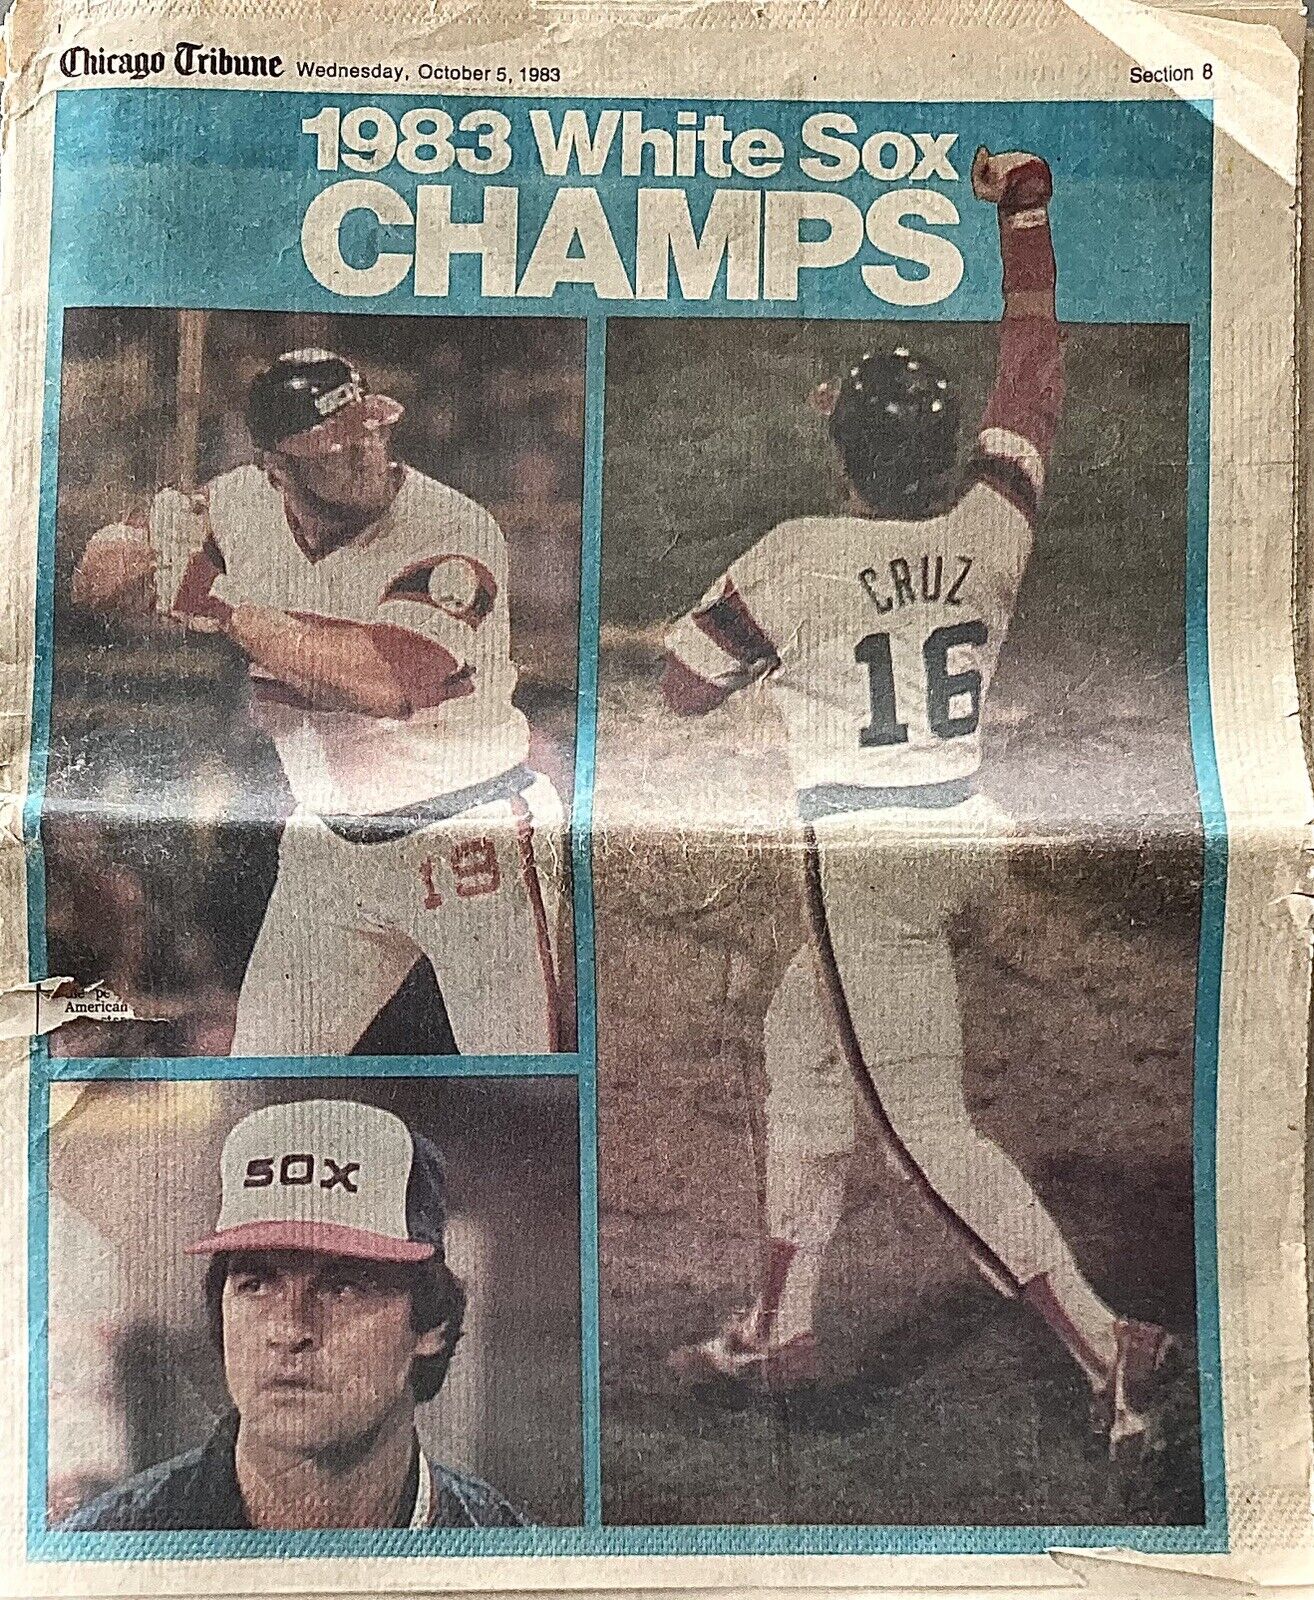 VTG 1983 Chicago Tribune Rare 48 Page Insert: White Sox Champs (October 5, 1983)